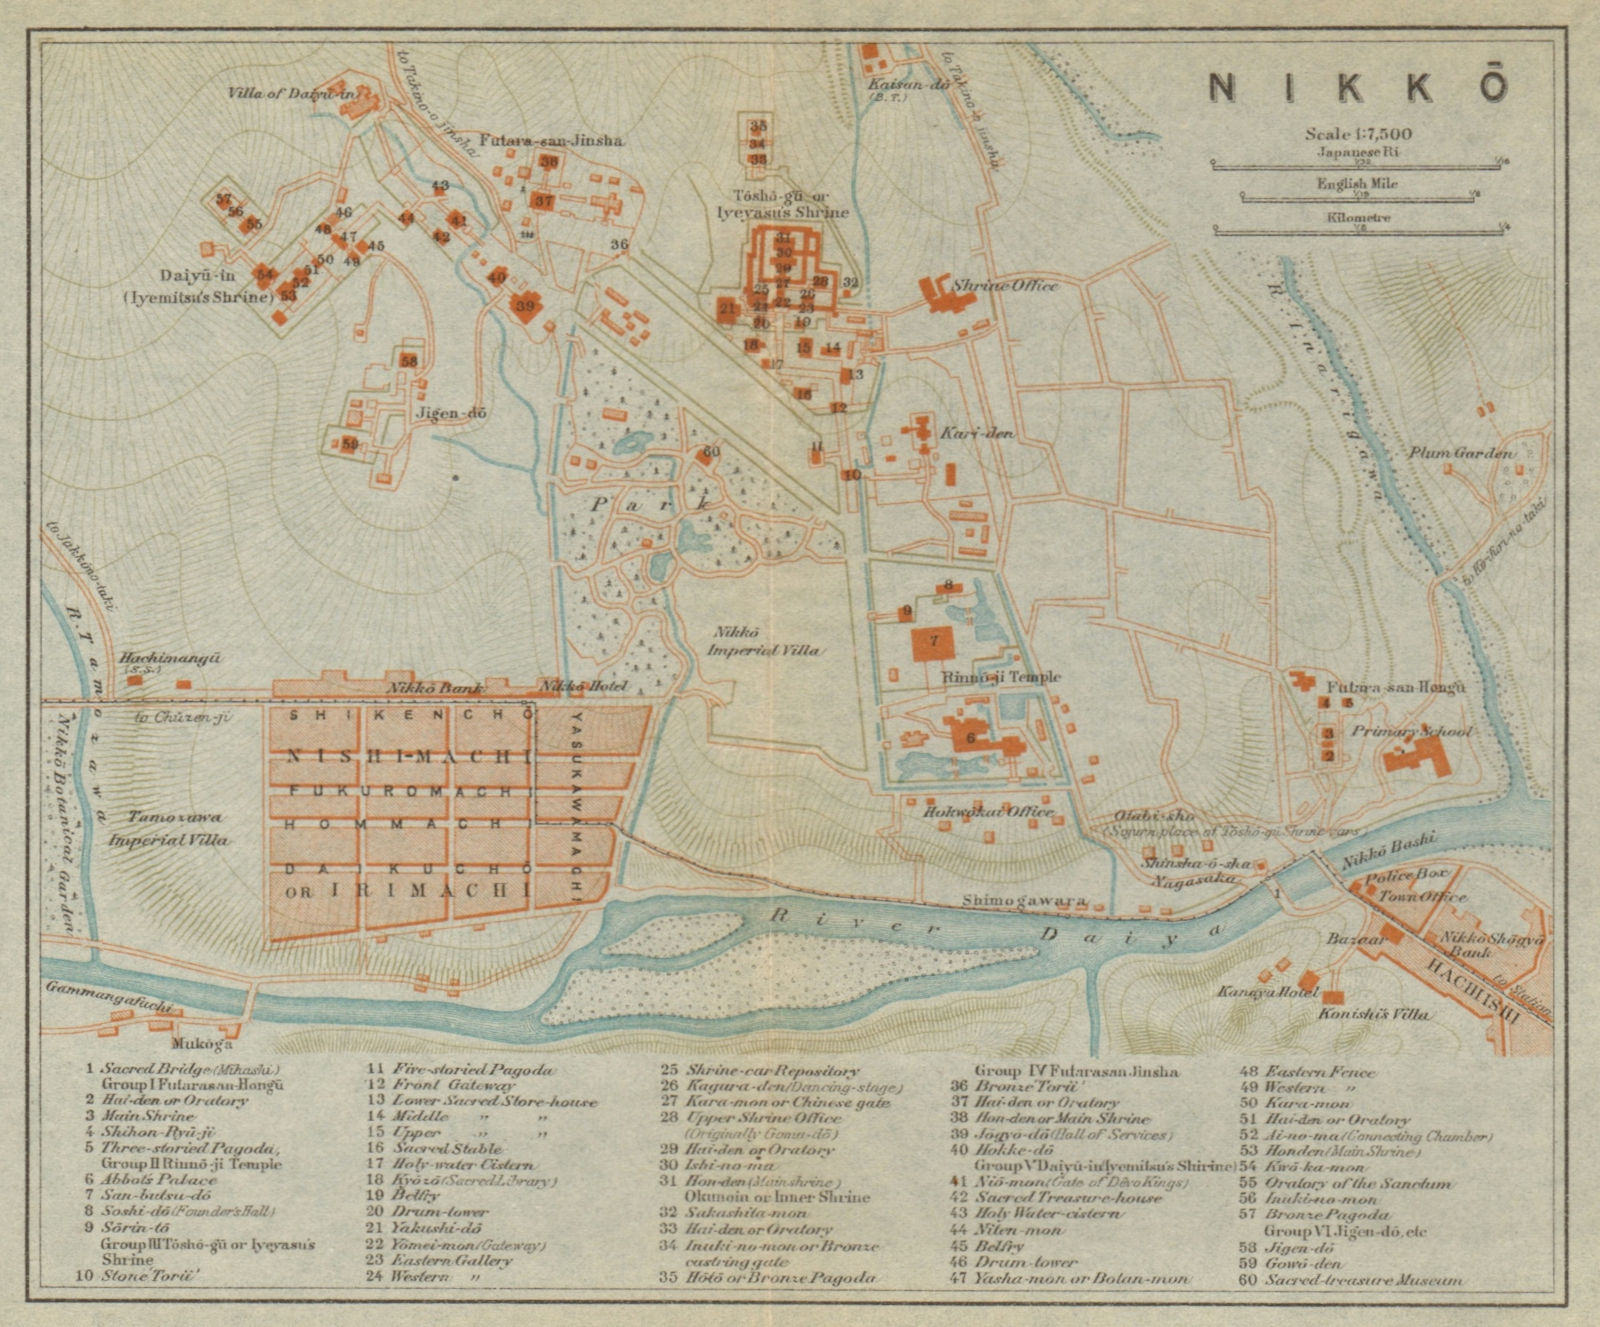 Associate Product Nikko antique town city plan. Tochigi. Japan 1914 old map chart